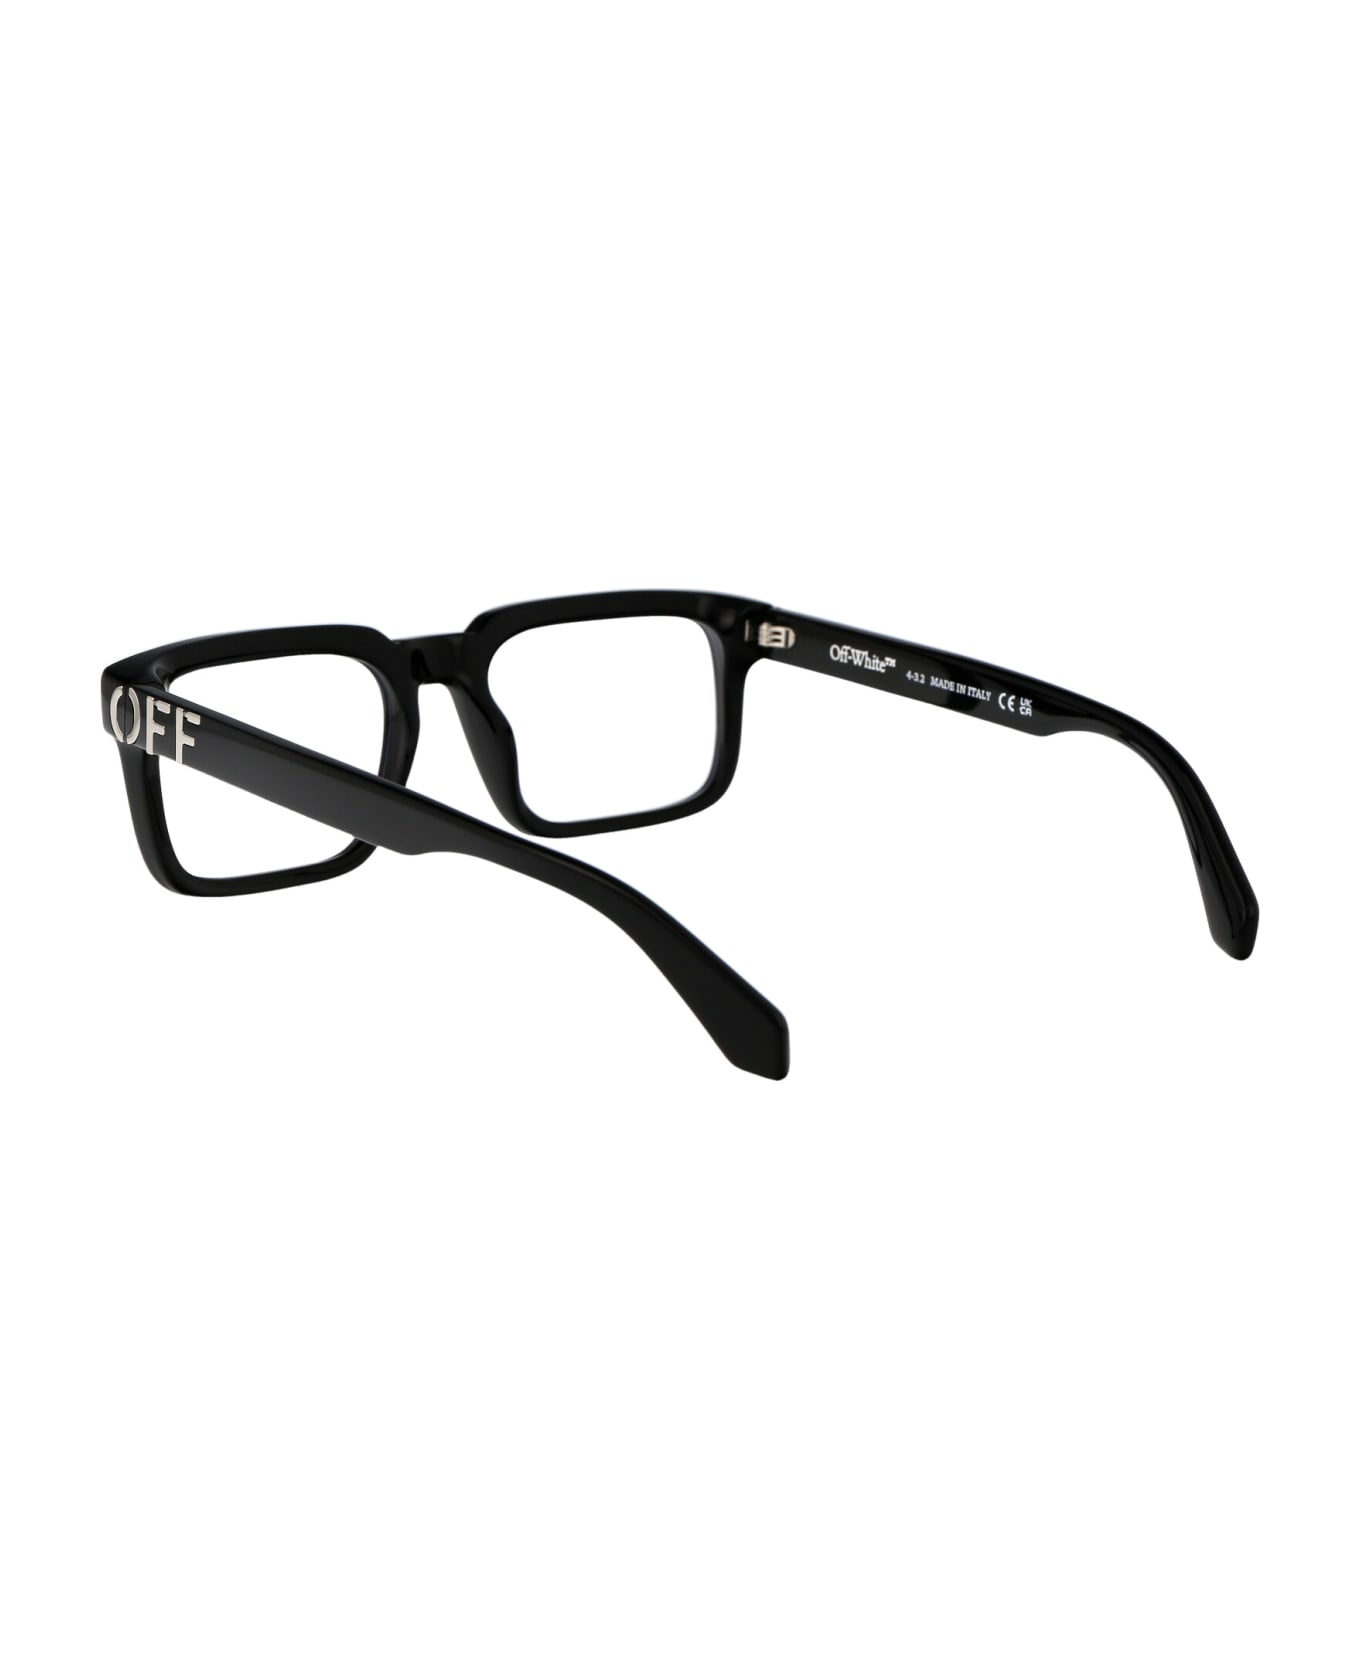 Off-White Optical Style 70 Glasses - 1000 BLACK